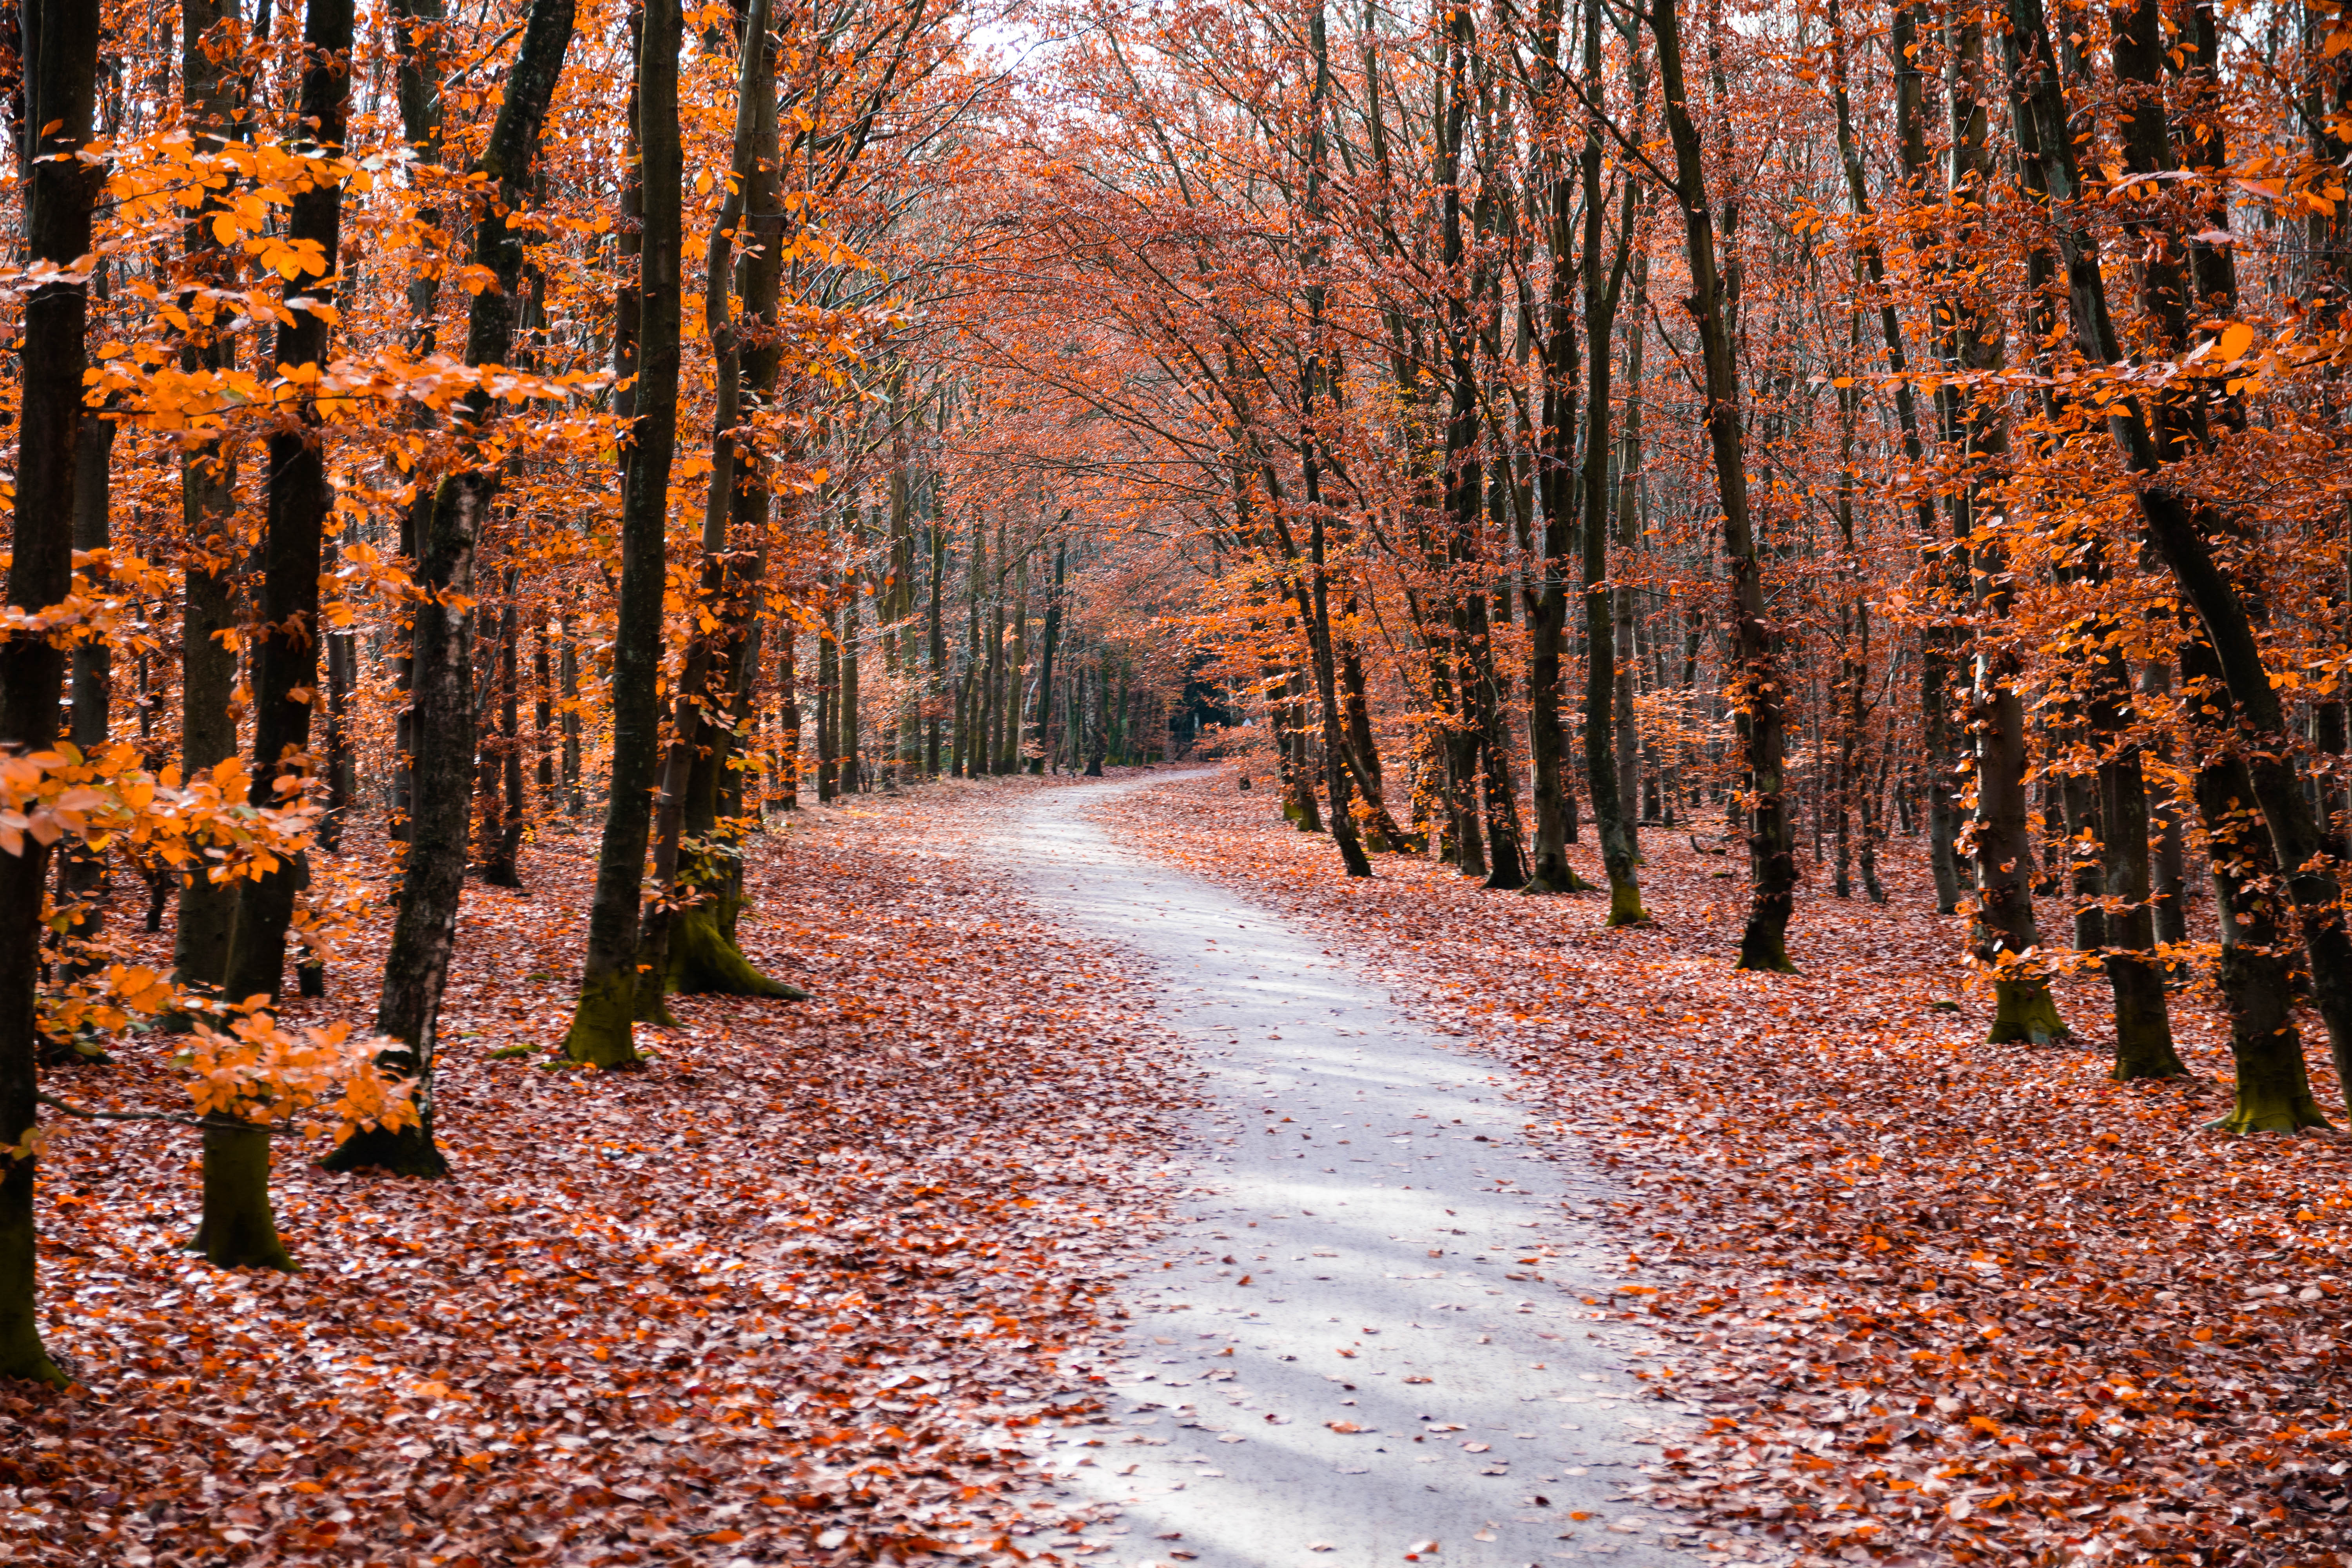 Trees alongside a path in autumn